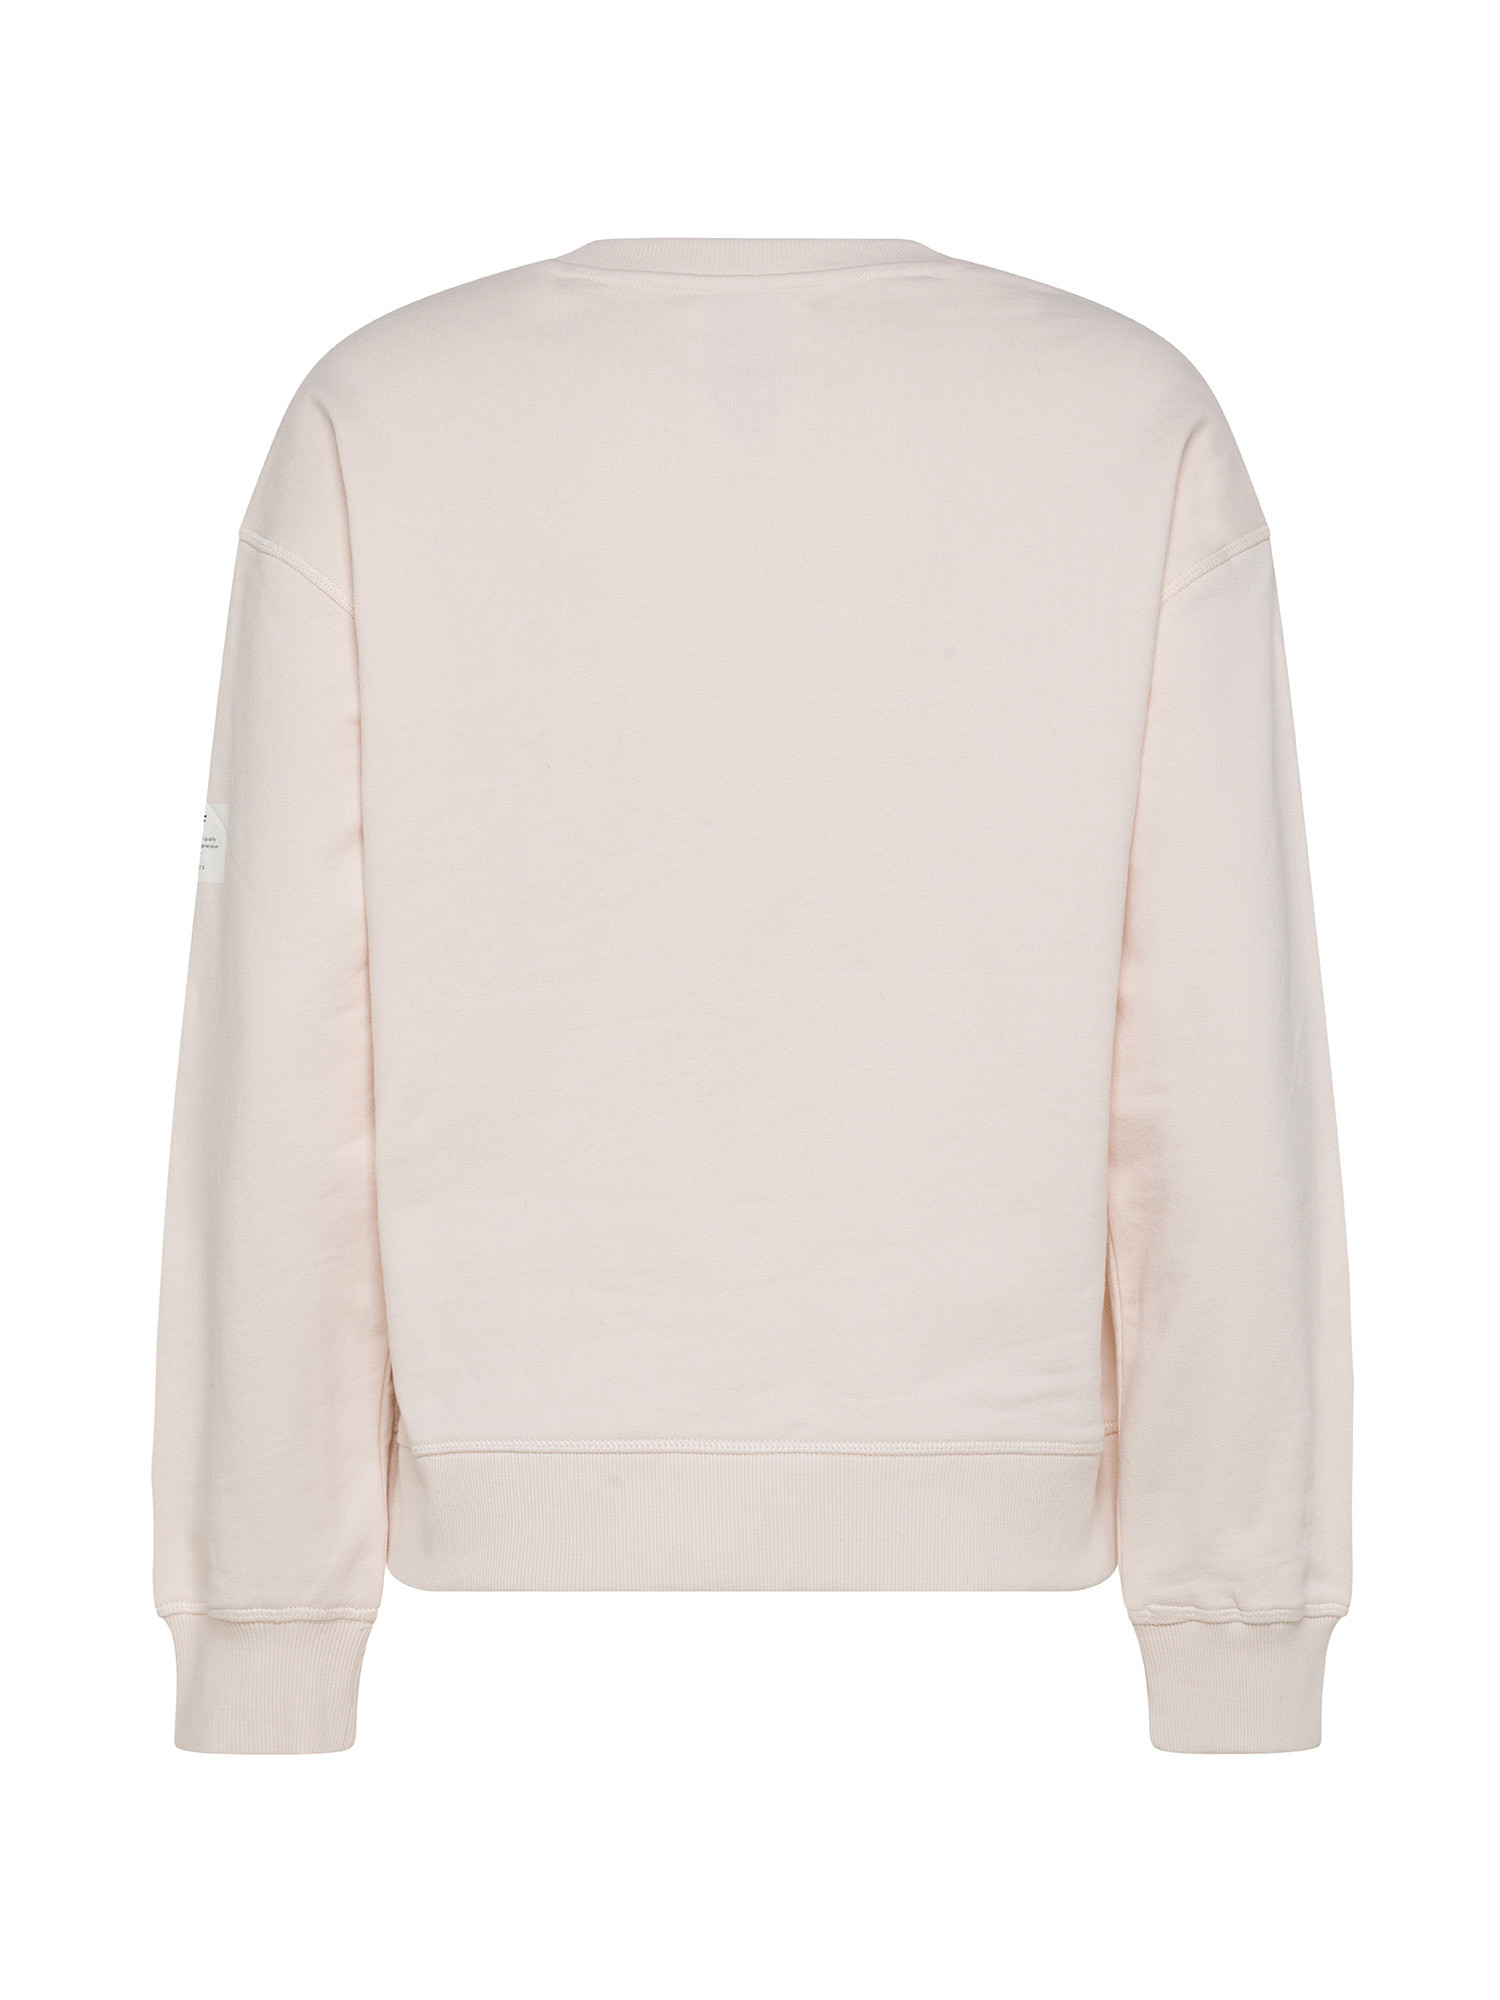 Ecoalf - Cagliari sweatshirt with writing, White Cream, large image number 1